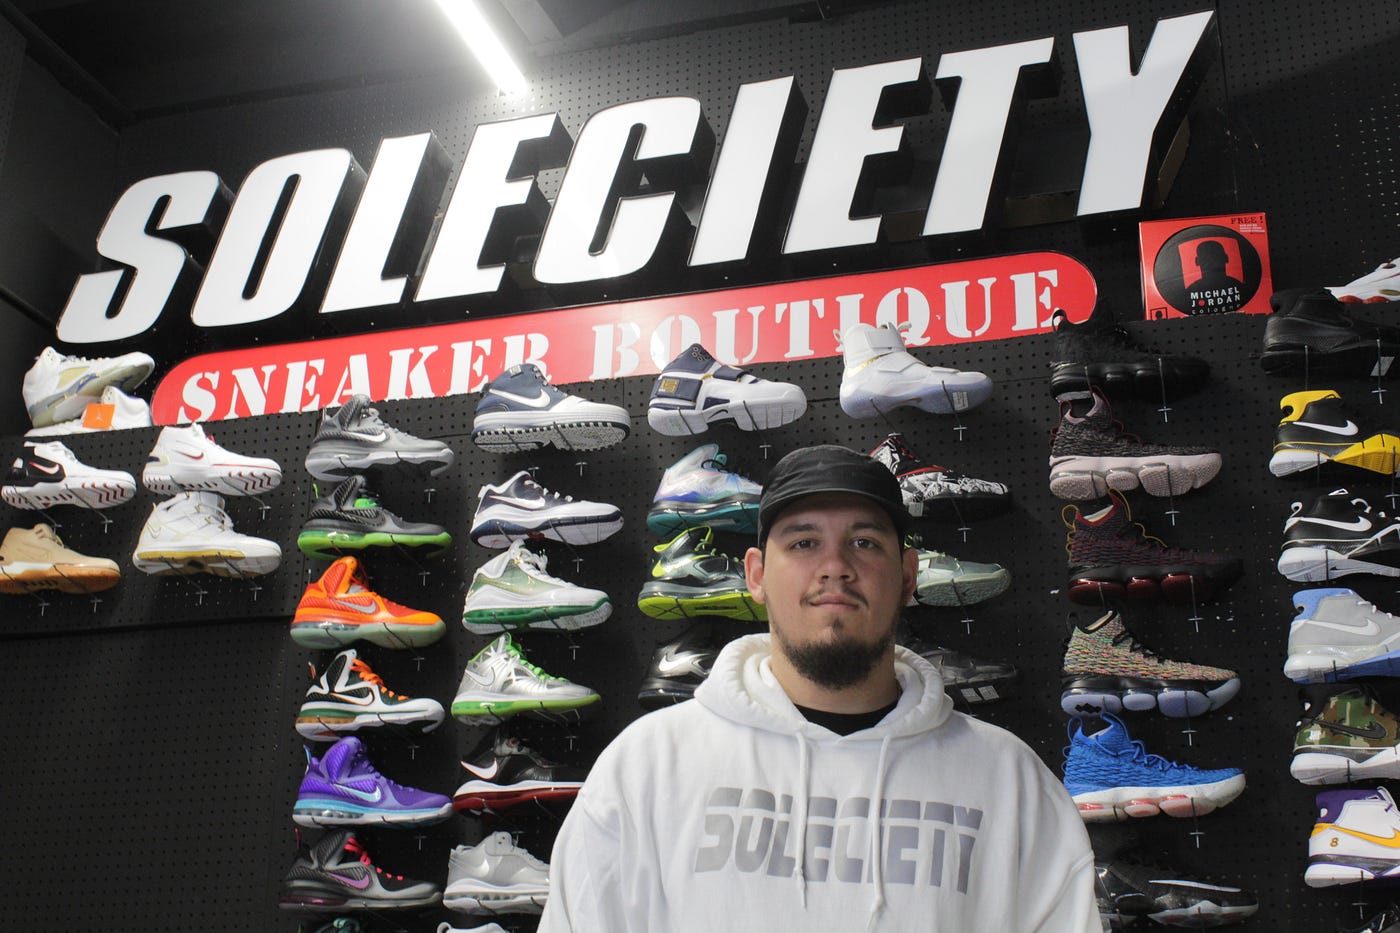 Soleciety is Tampa’s Premier Sneaker Shop | by Regi | Medium